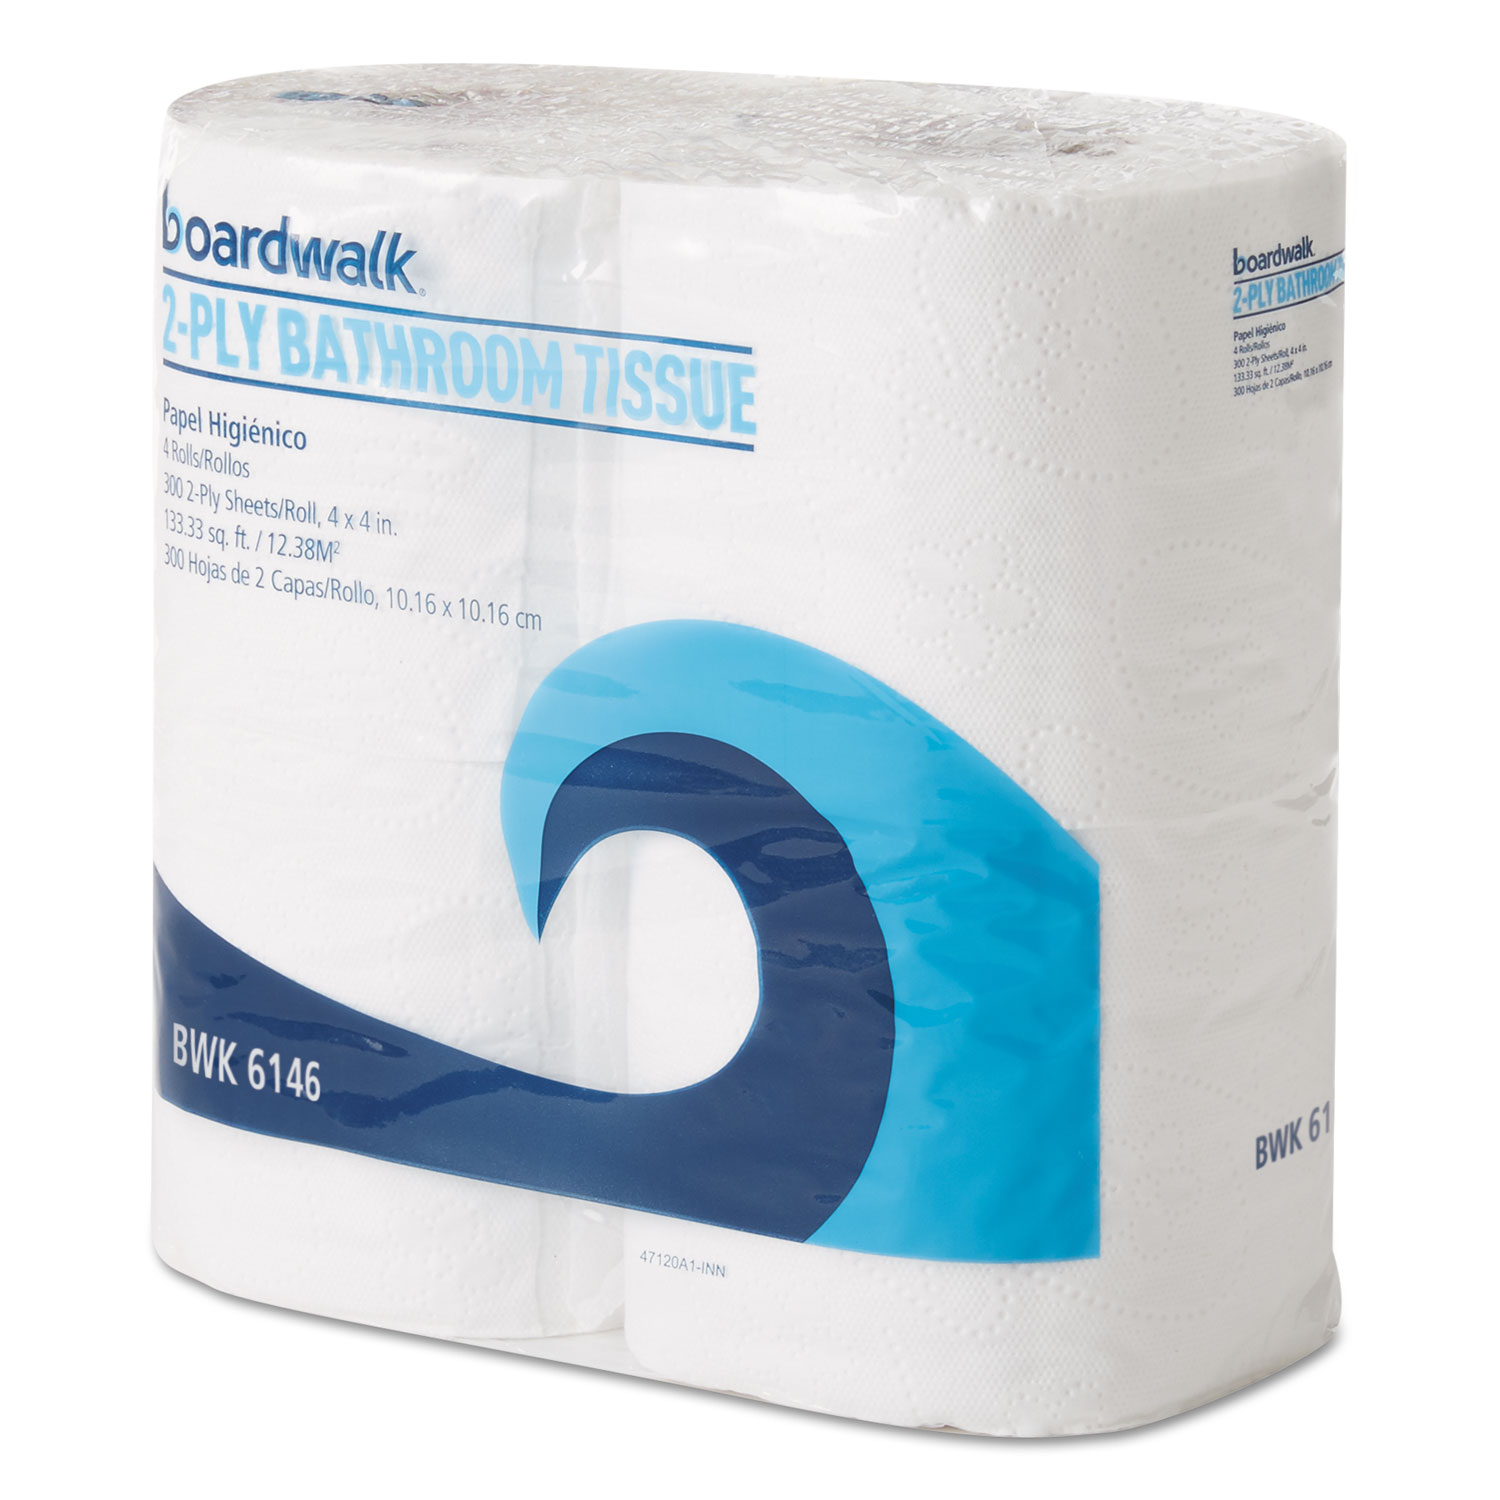  Boardwalk 7120 Office Packs Standard Bathroom Tissue, Septic Safe, 2-Ply, White, 300 Sheets/Roll, 24 Rolls/Carton (BWK6146) 